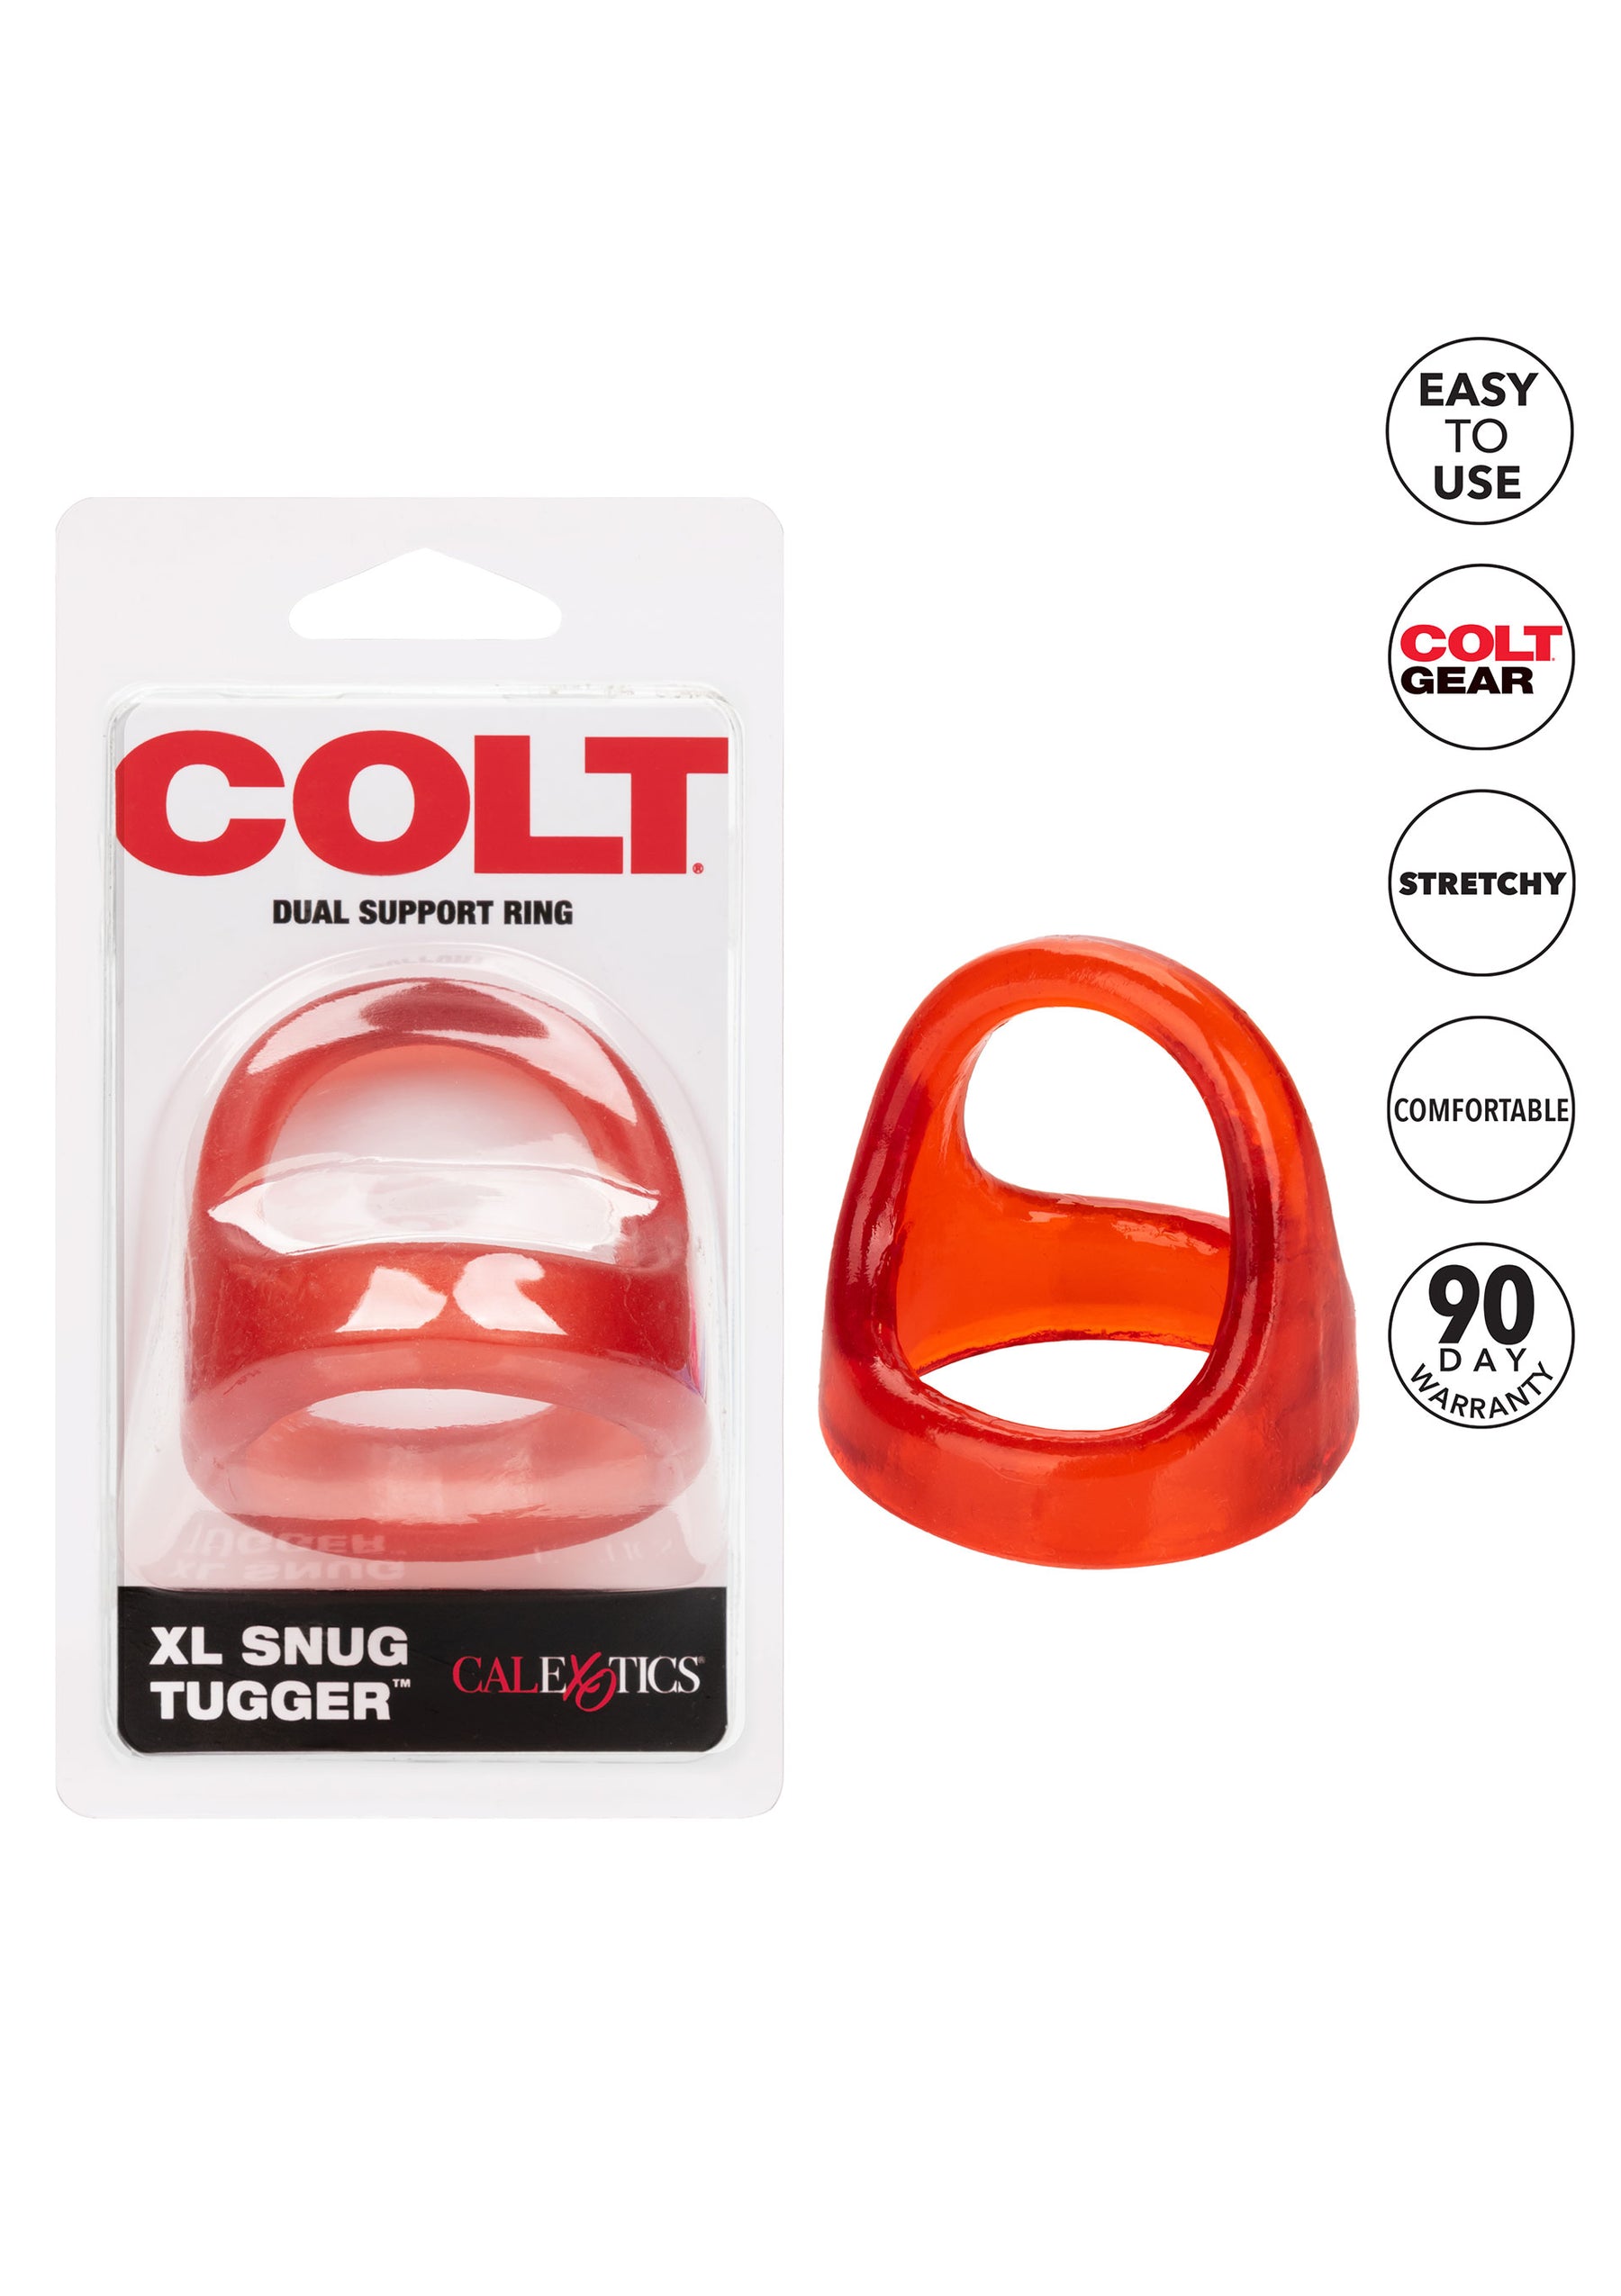 COLT XL Snug Tugger